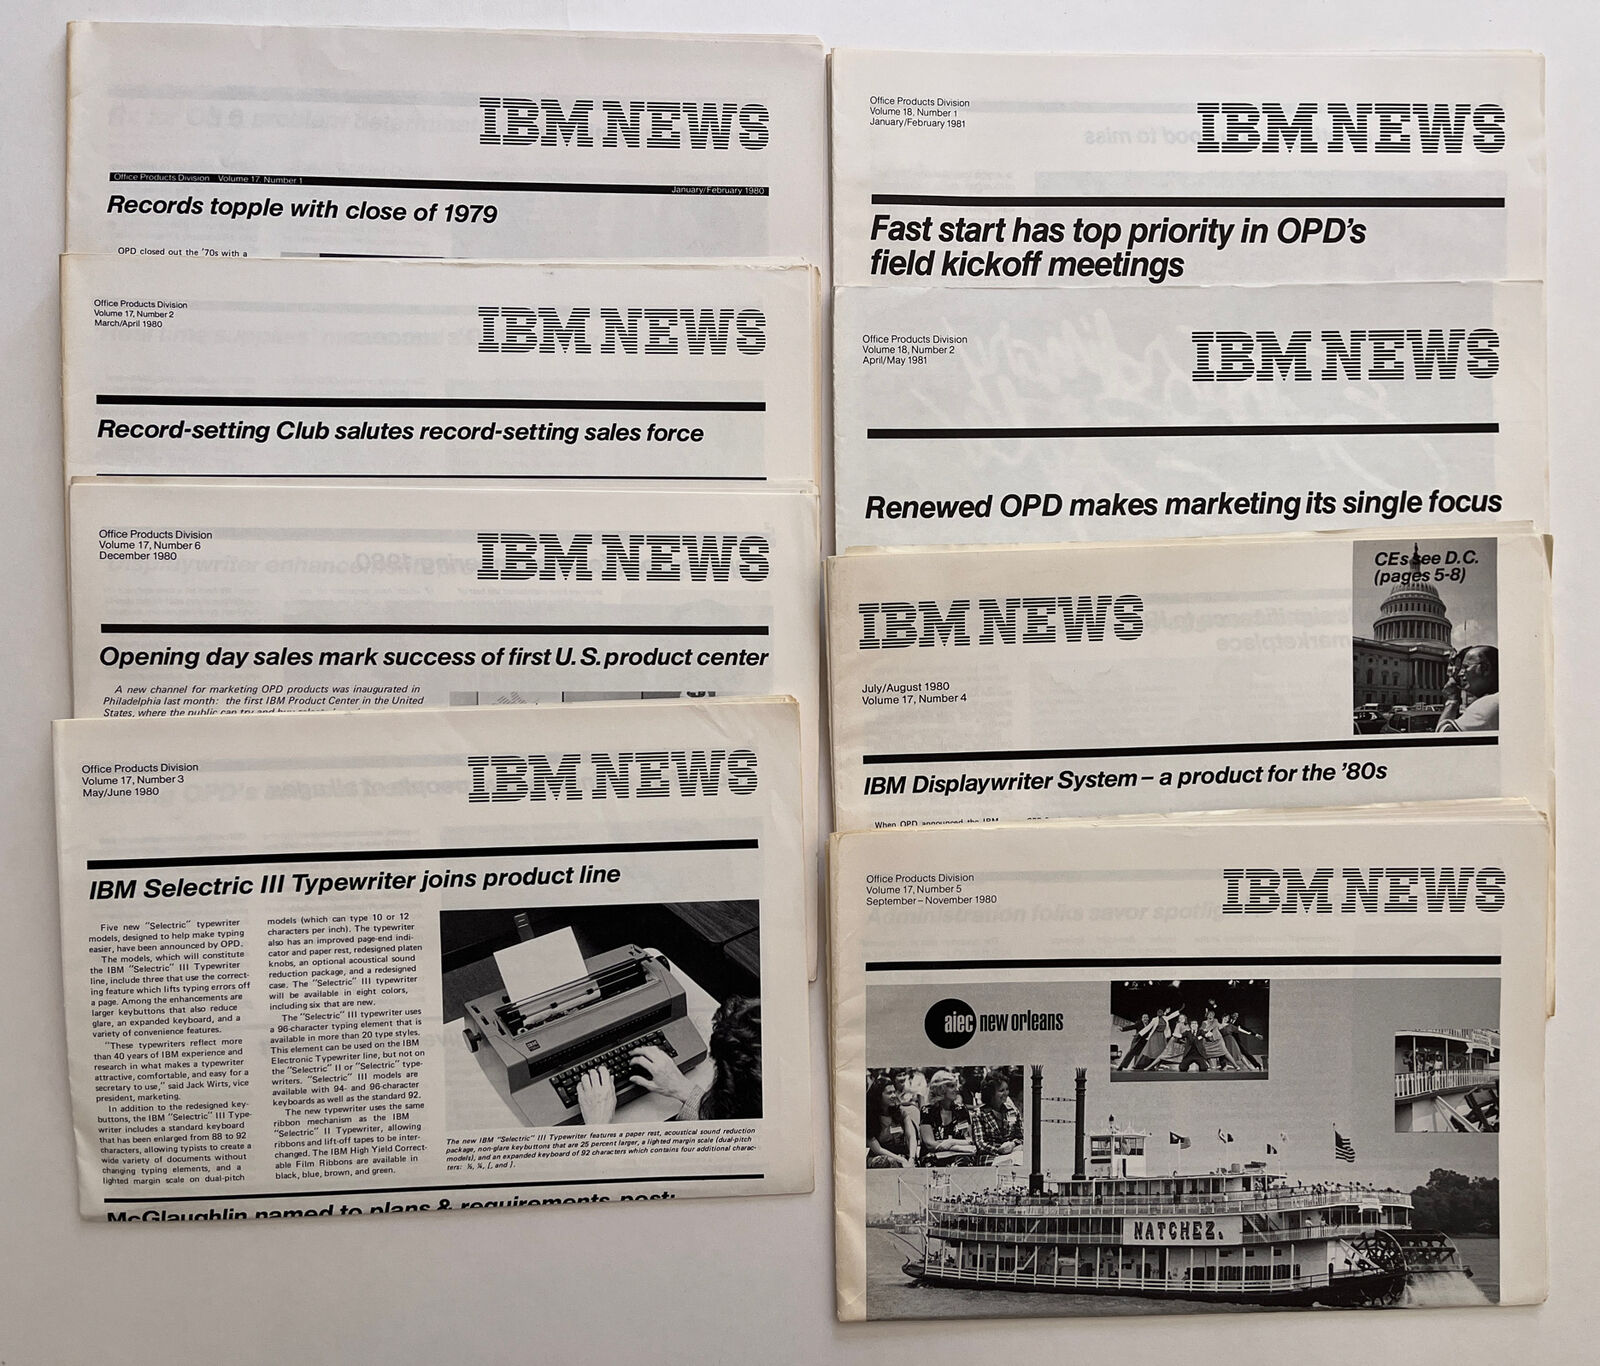 IBM NEWS newspaper Office Products Division - Vintage IBM Ephemera 8 Issues 1980